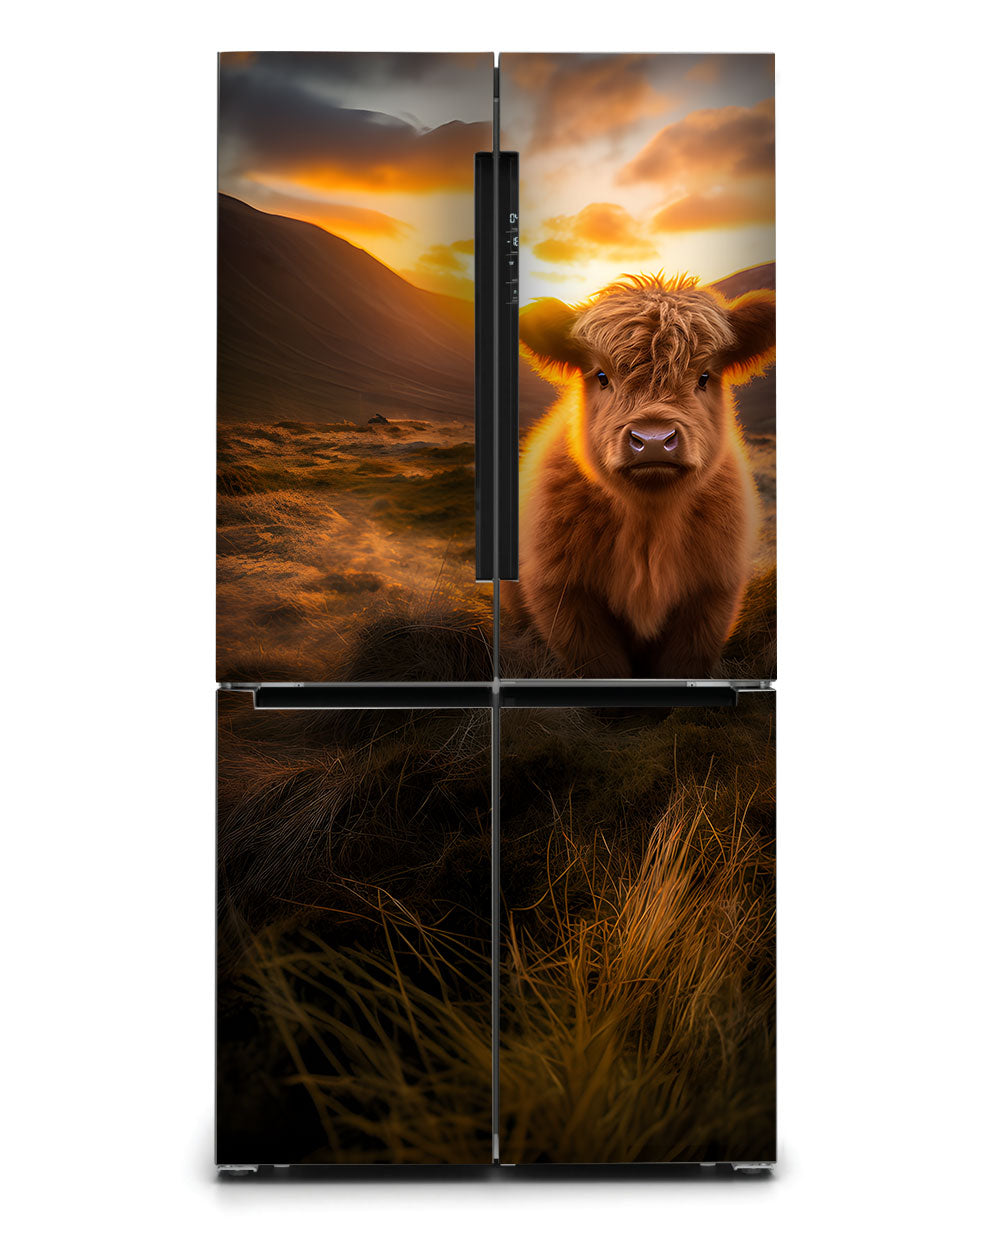 A Highland calf at sunrise